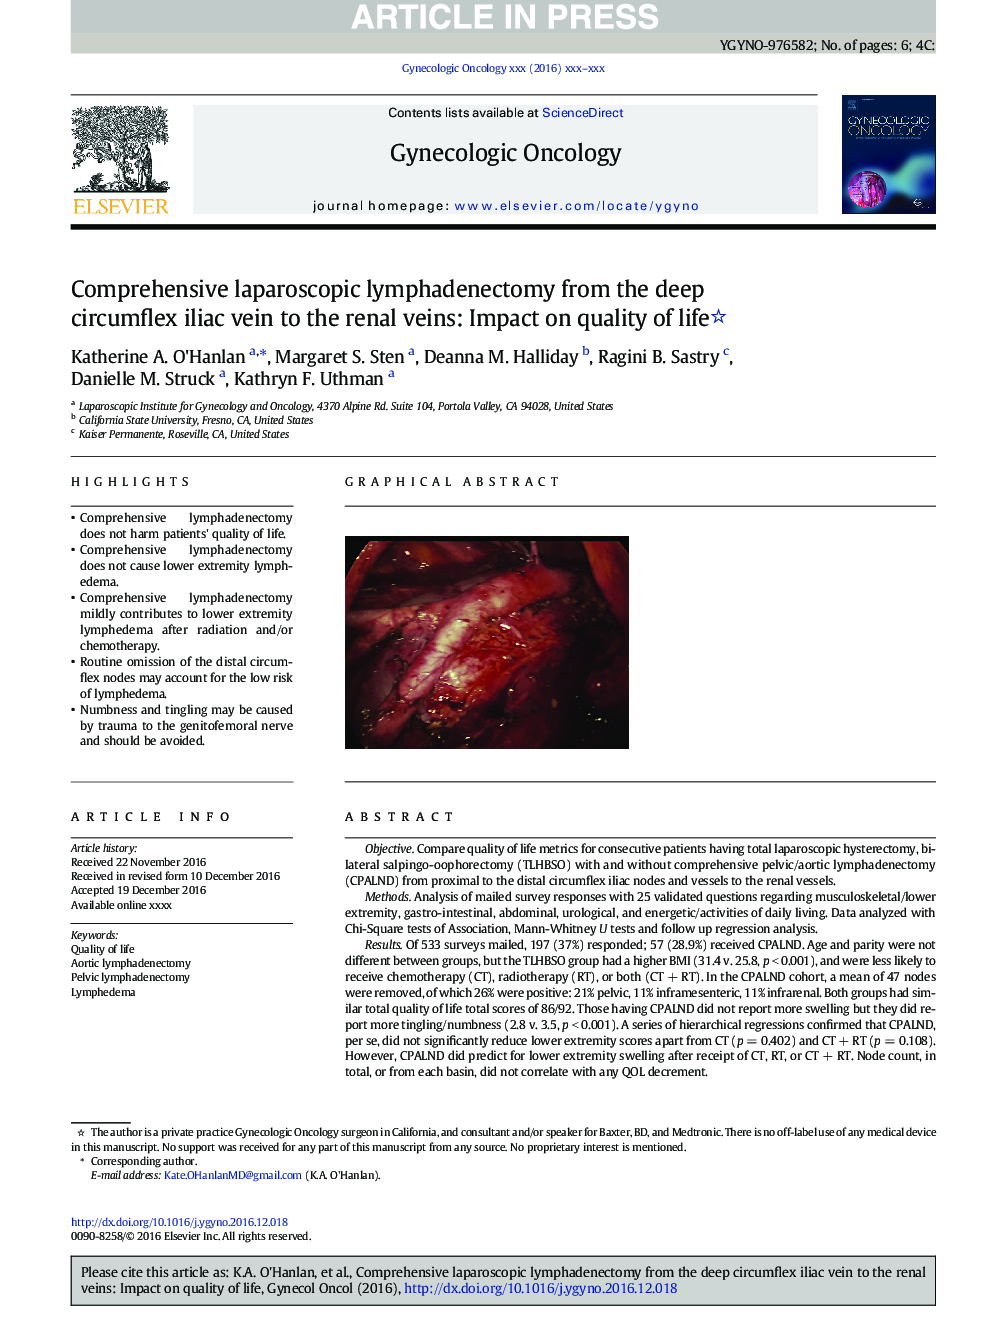 Comprehensive laparoscopic lymphadenectomy from the deep circumflex iliac vein to the renal veins: Impact on quality of life